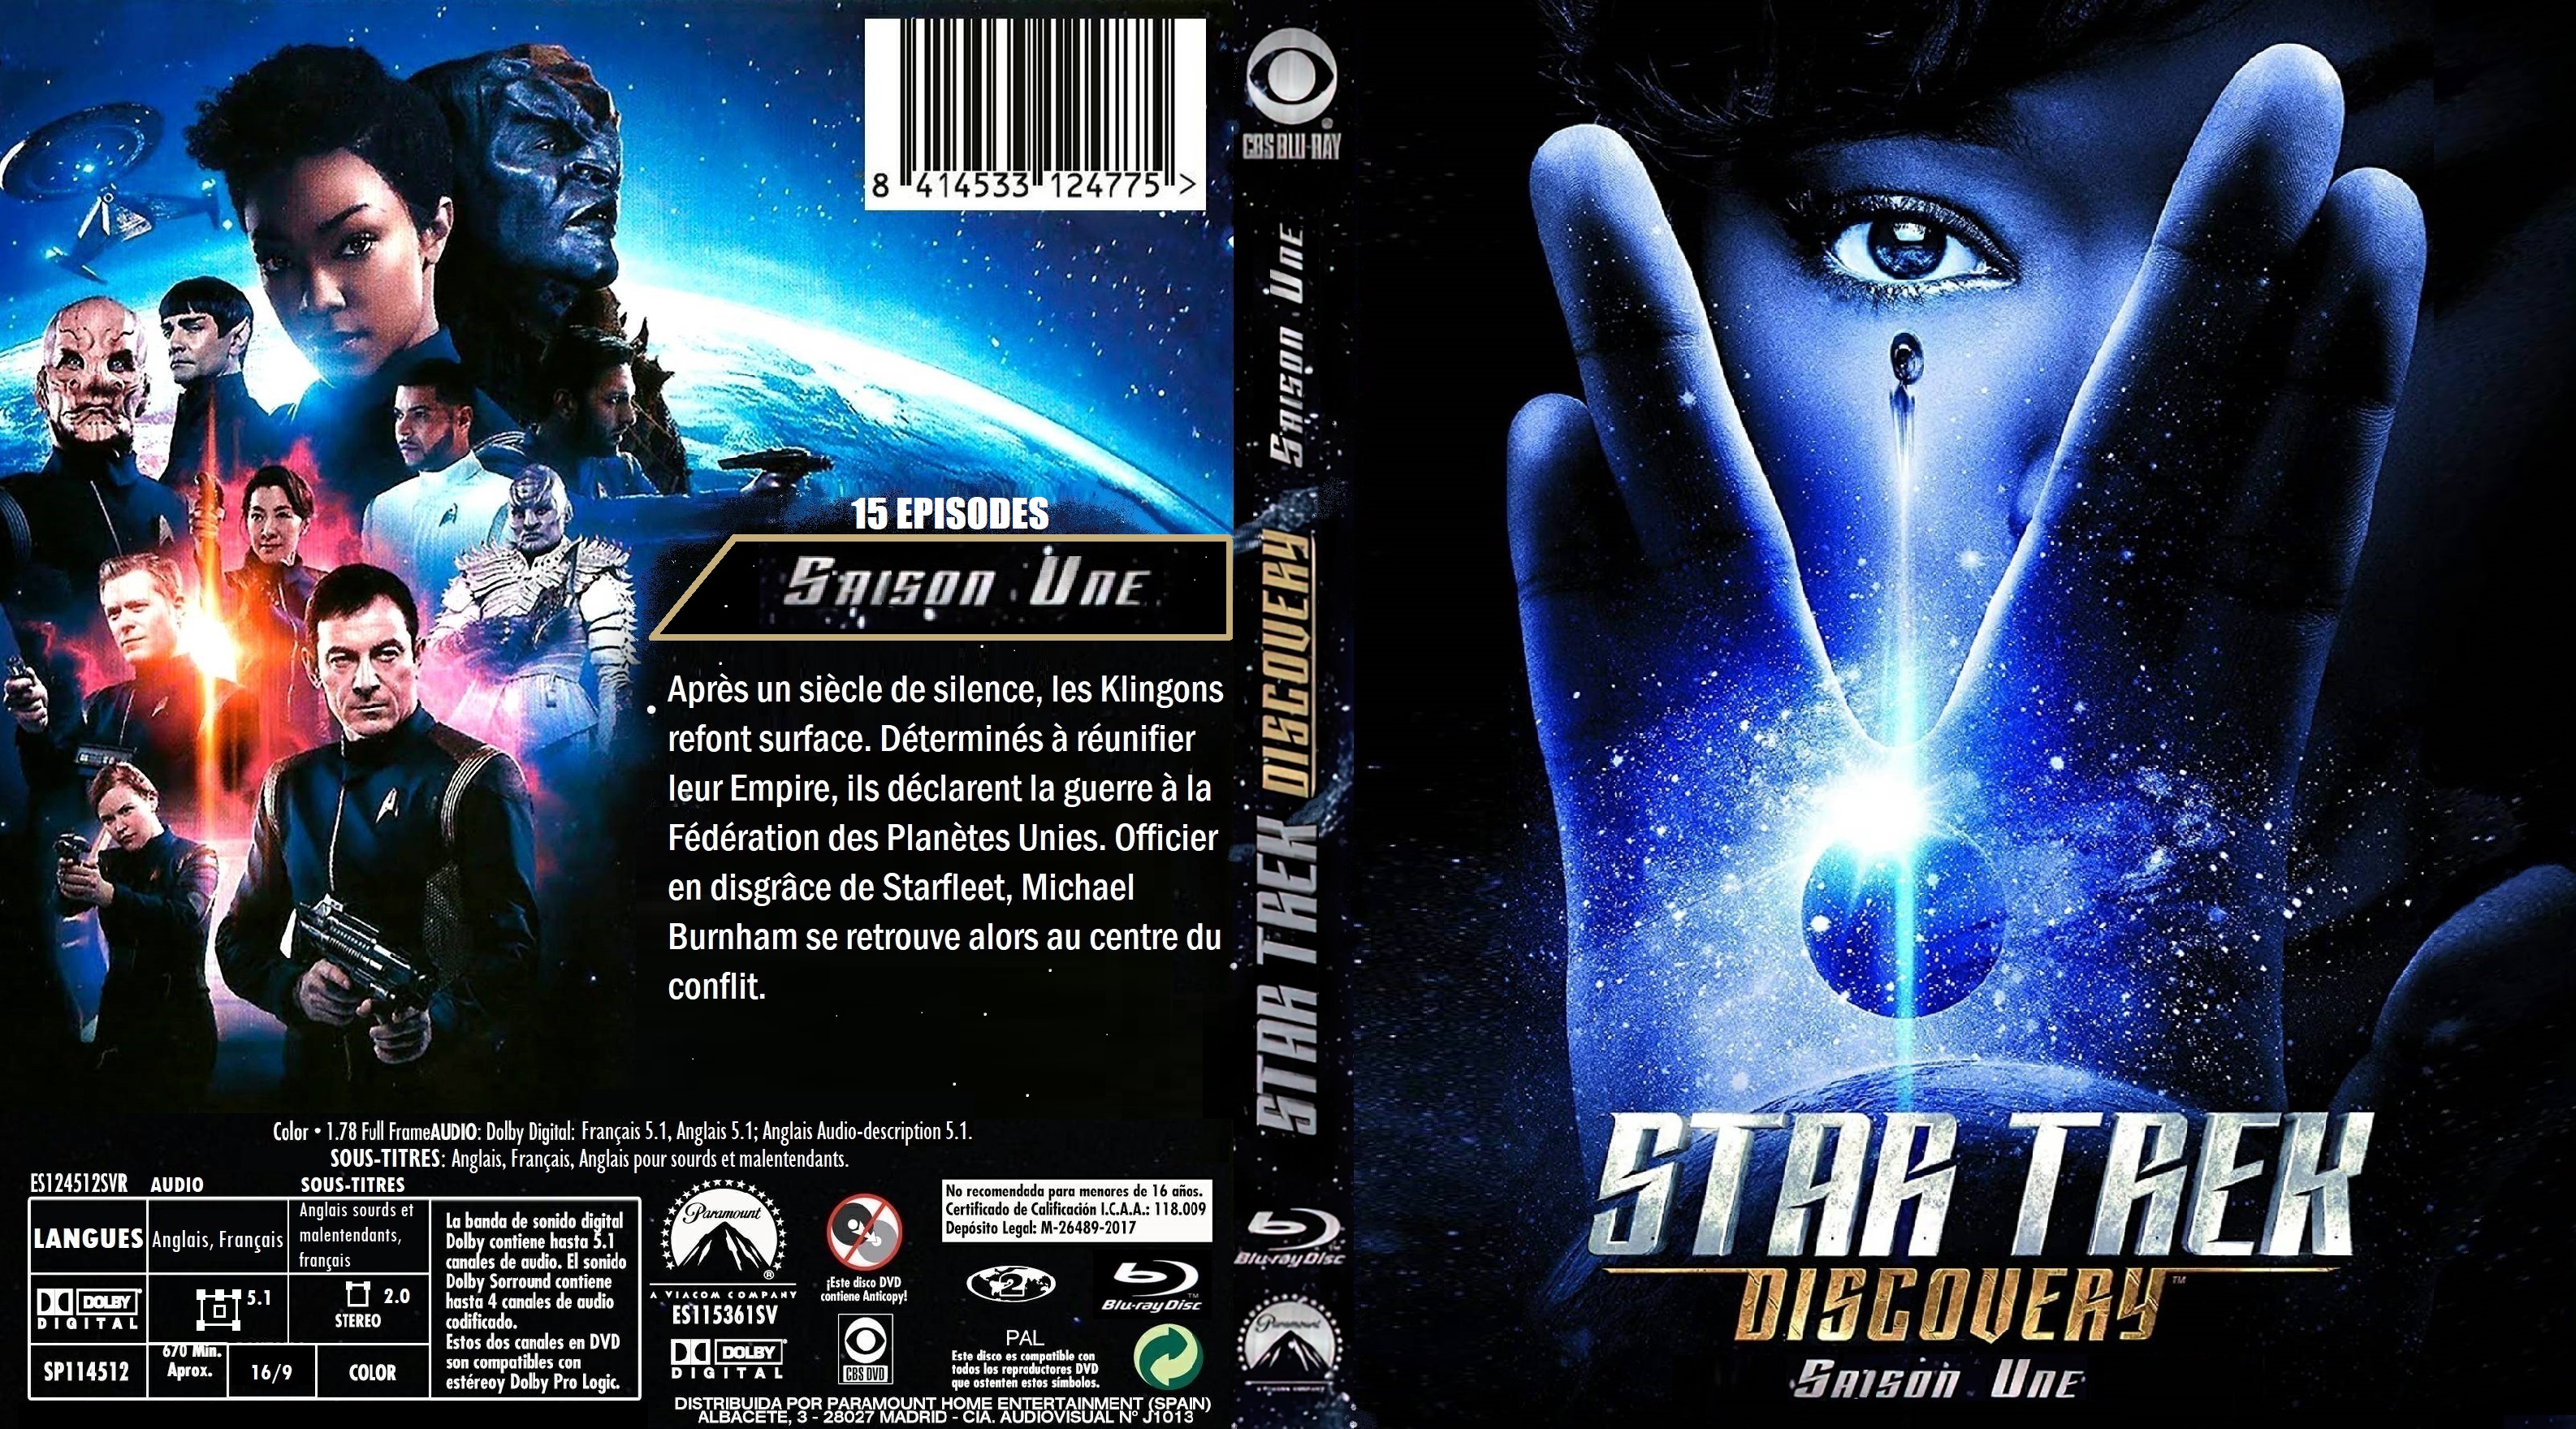 Jaquette DVD Star Trek Discovery Saison 1 Blu-ray custom